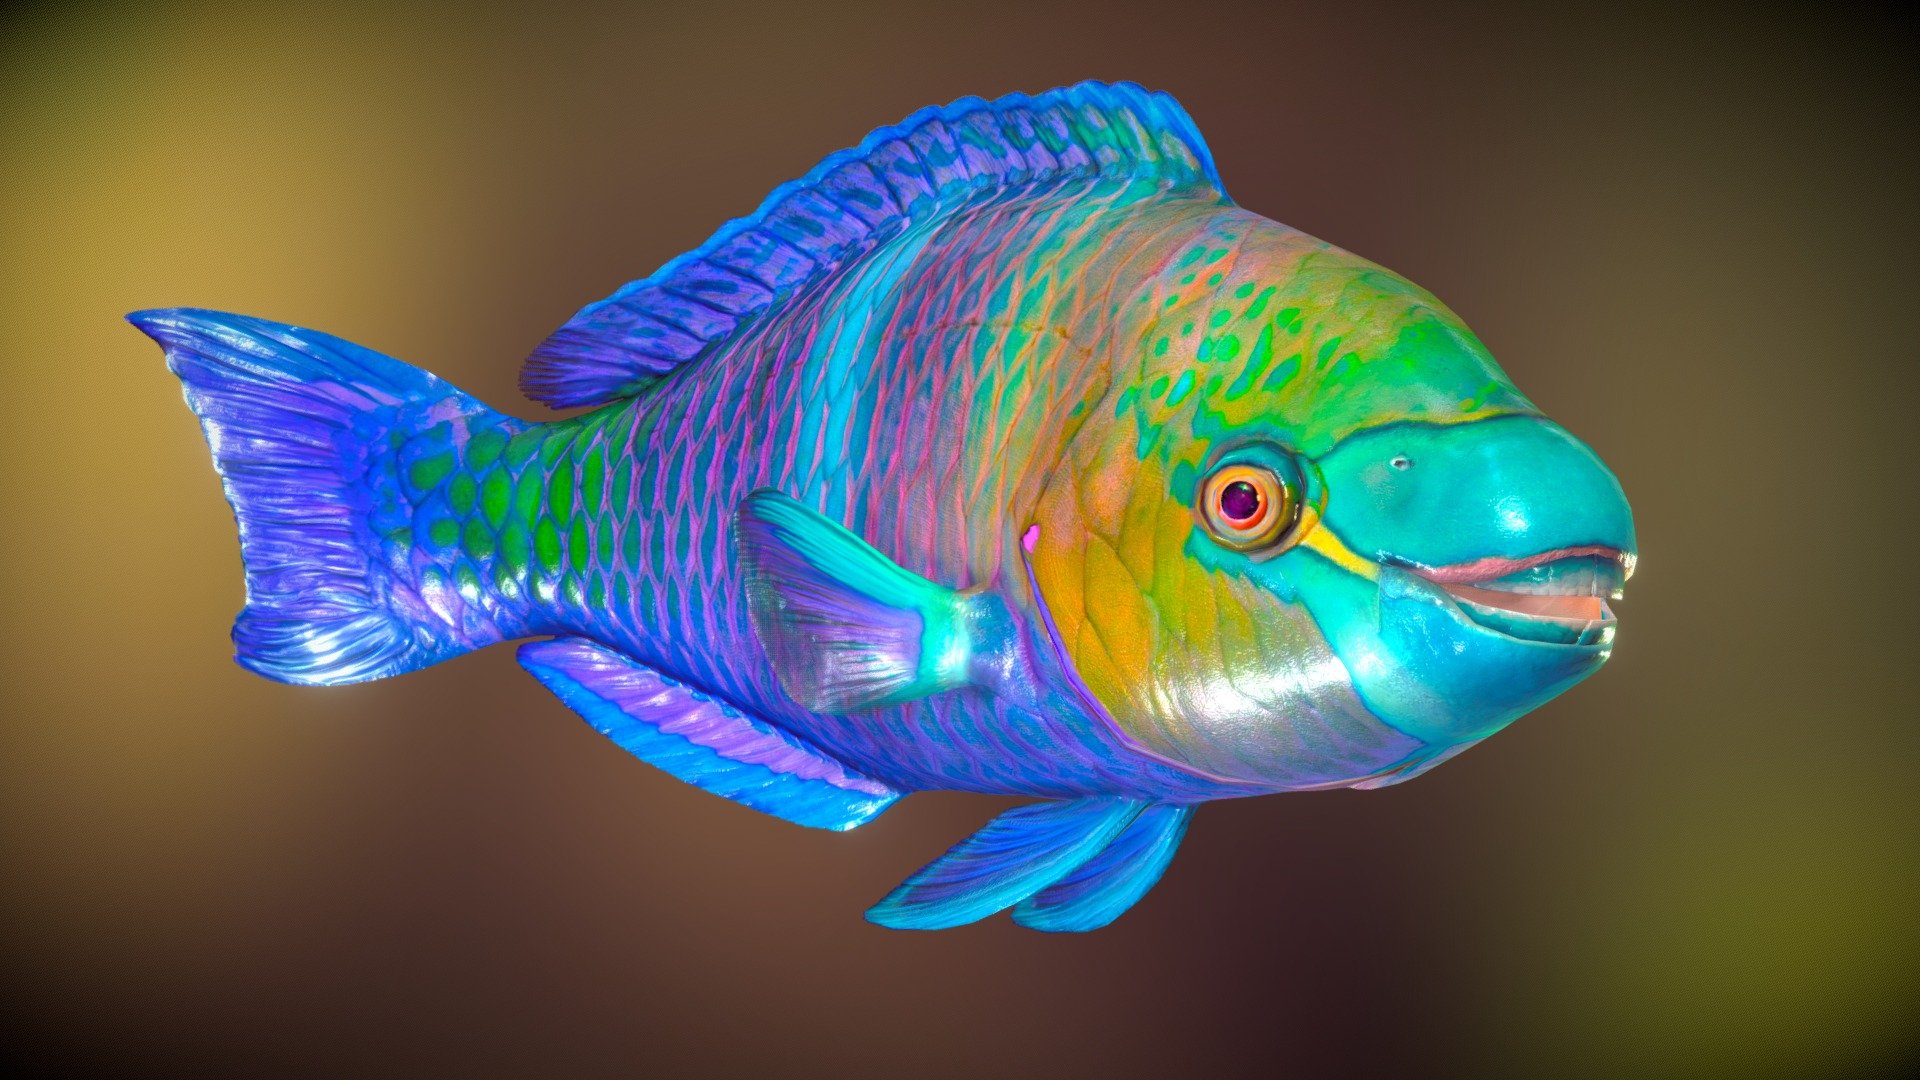 Parrotfish Lowpoly model - 3D model by Alex Bereschuk (@bereshuk.a) 3d model